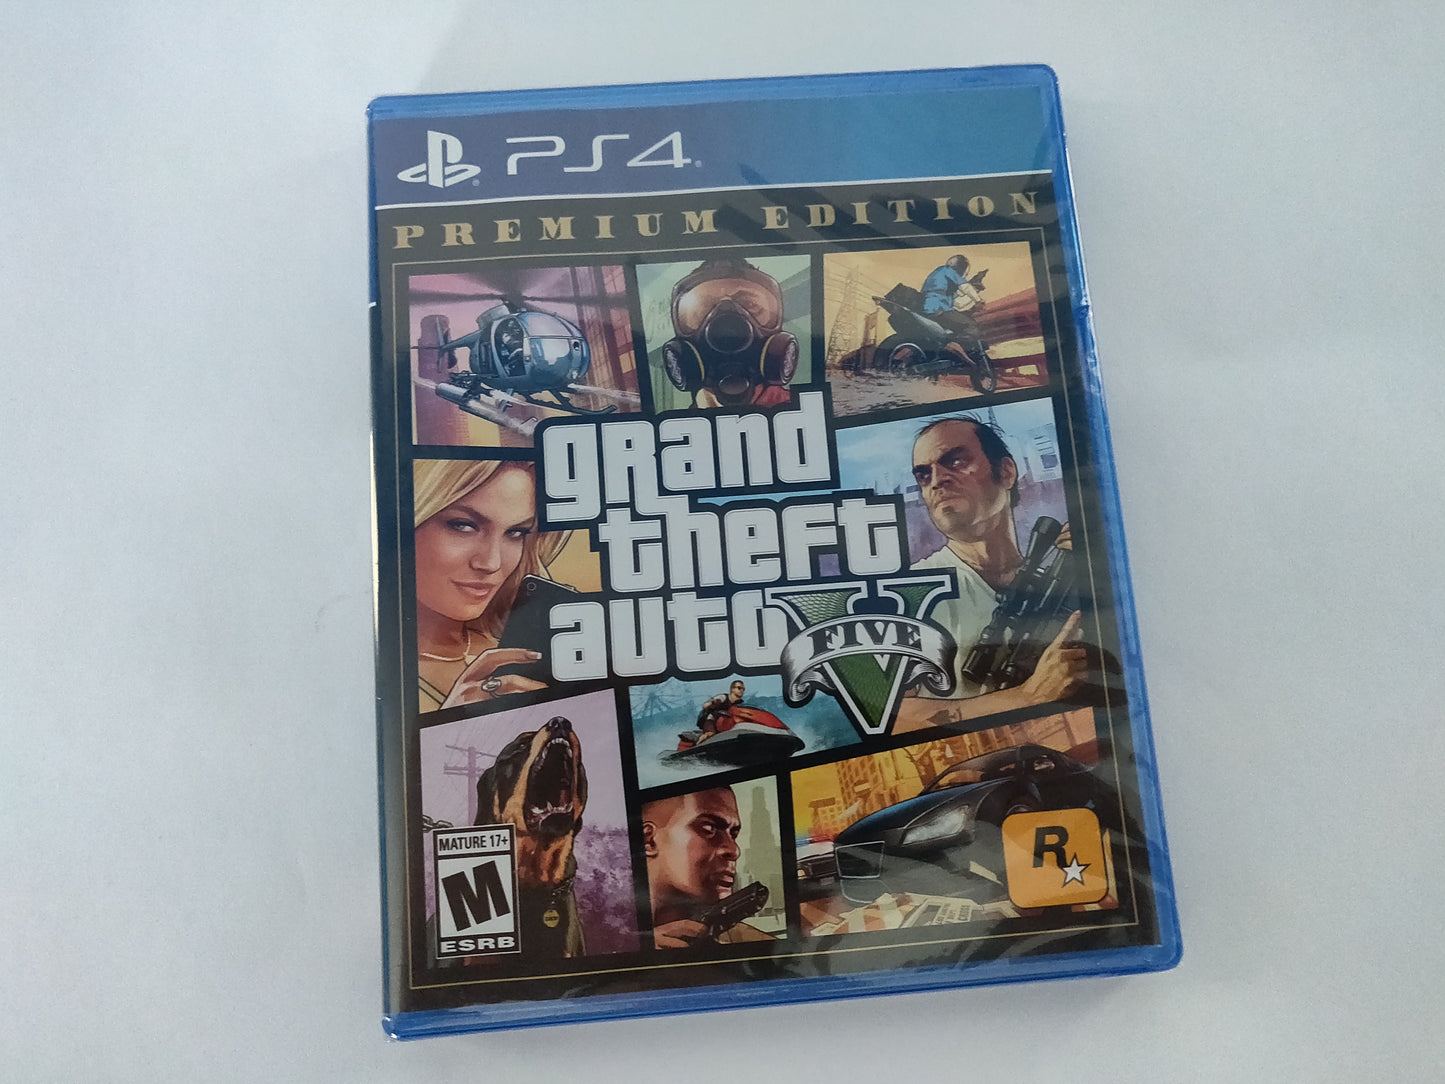 Playstation 4 Grand Theft Auto V Premium Edition